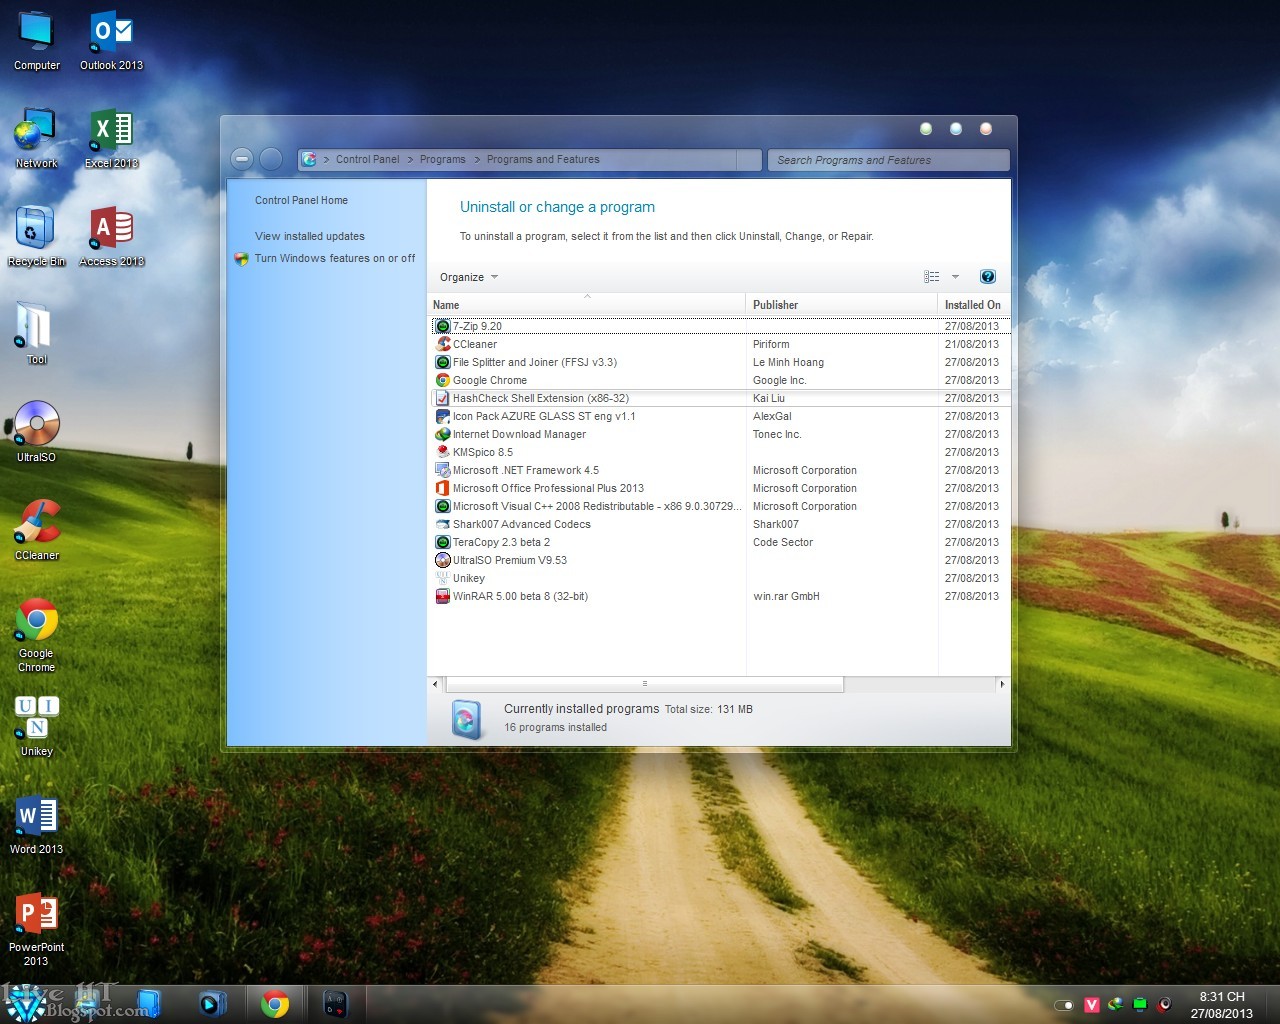 P2 Downloads for Windows 7 http://liveht.blogspot.com/2013/09/ghost ...